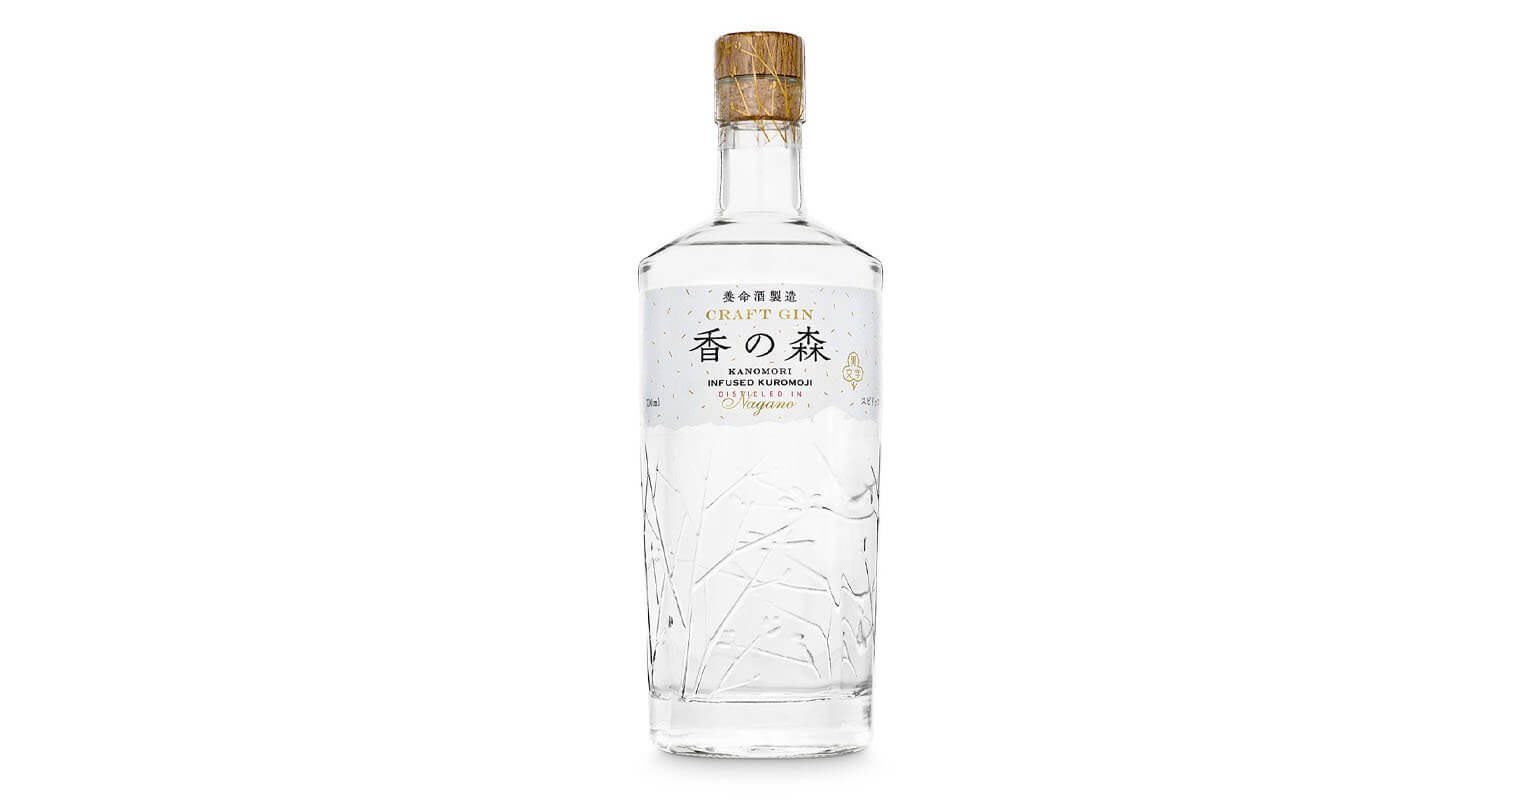 Kanomori Craft Gin, featured image